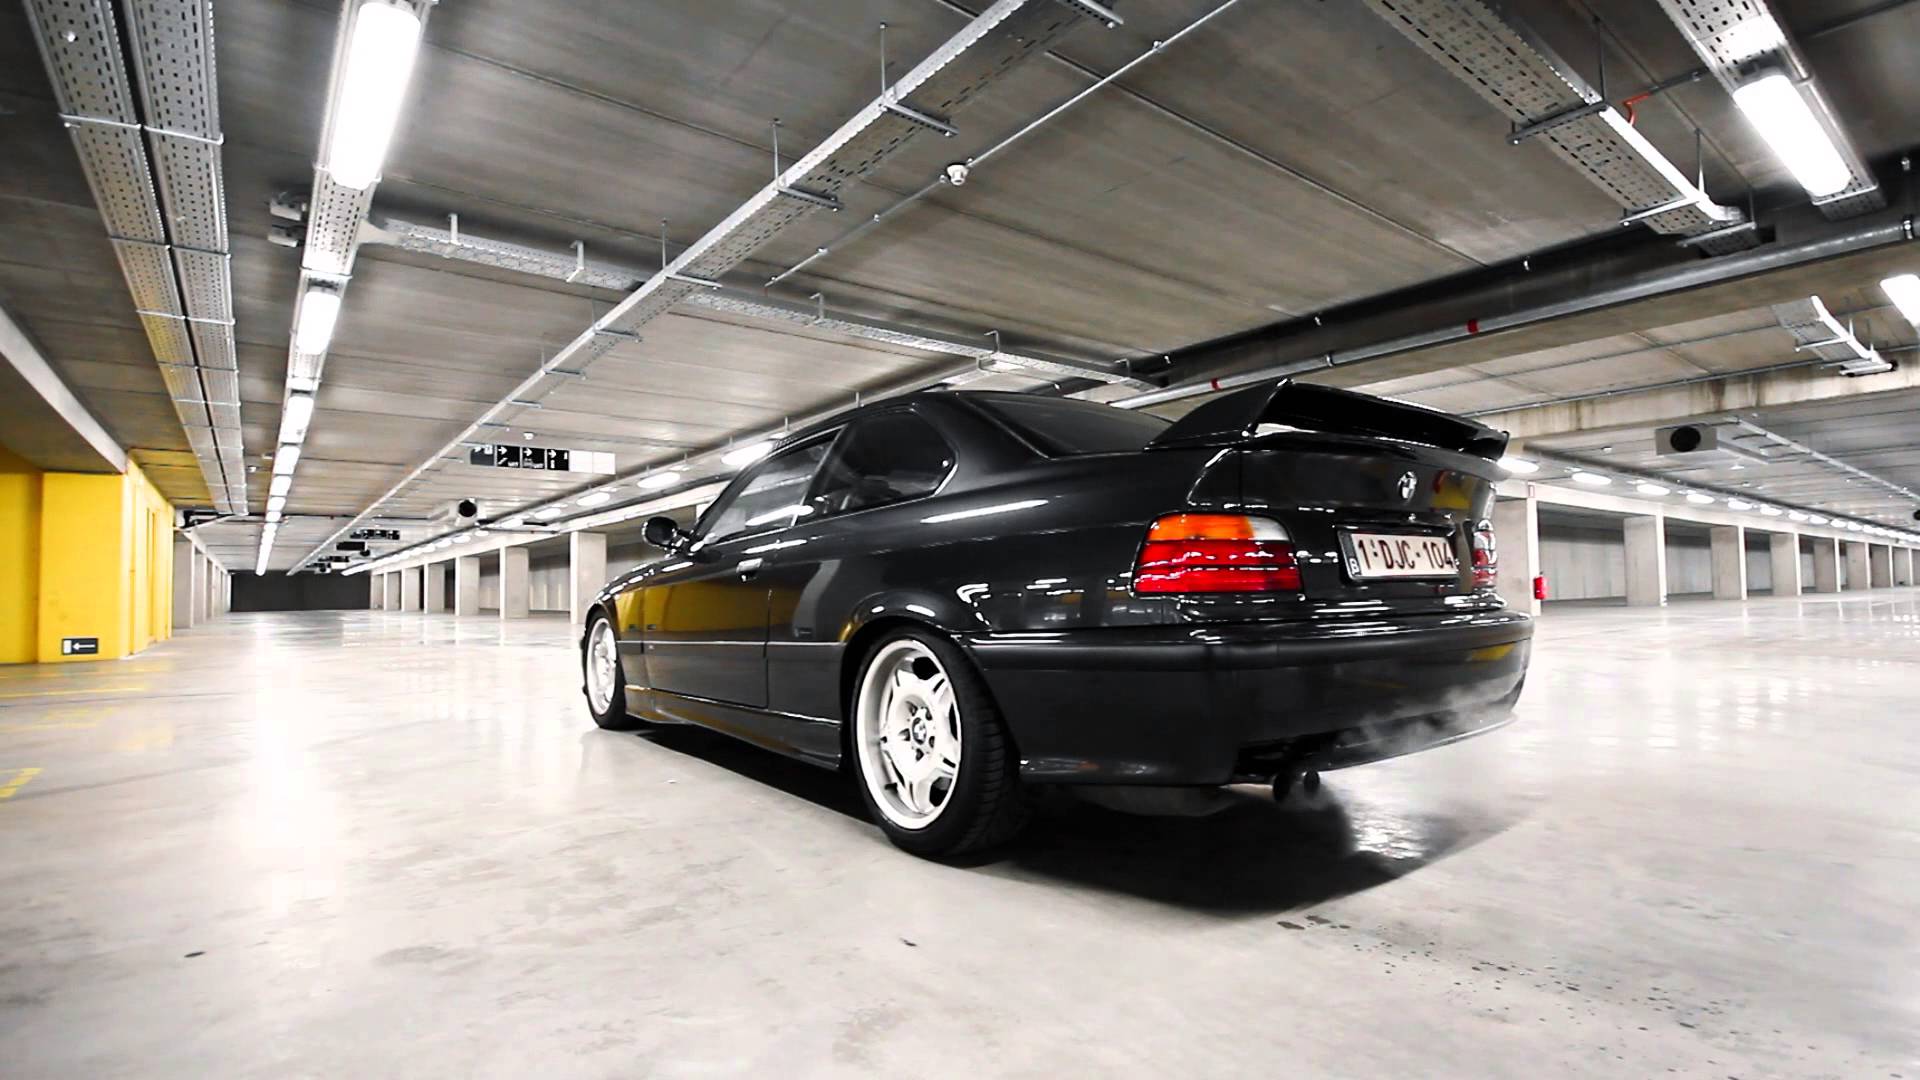 BMW E36 M3 Loud Revving and Burnout